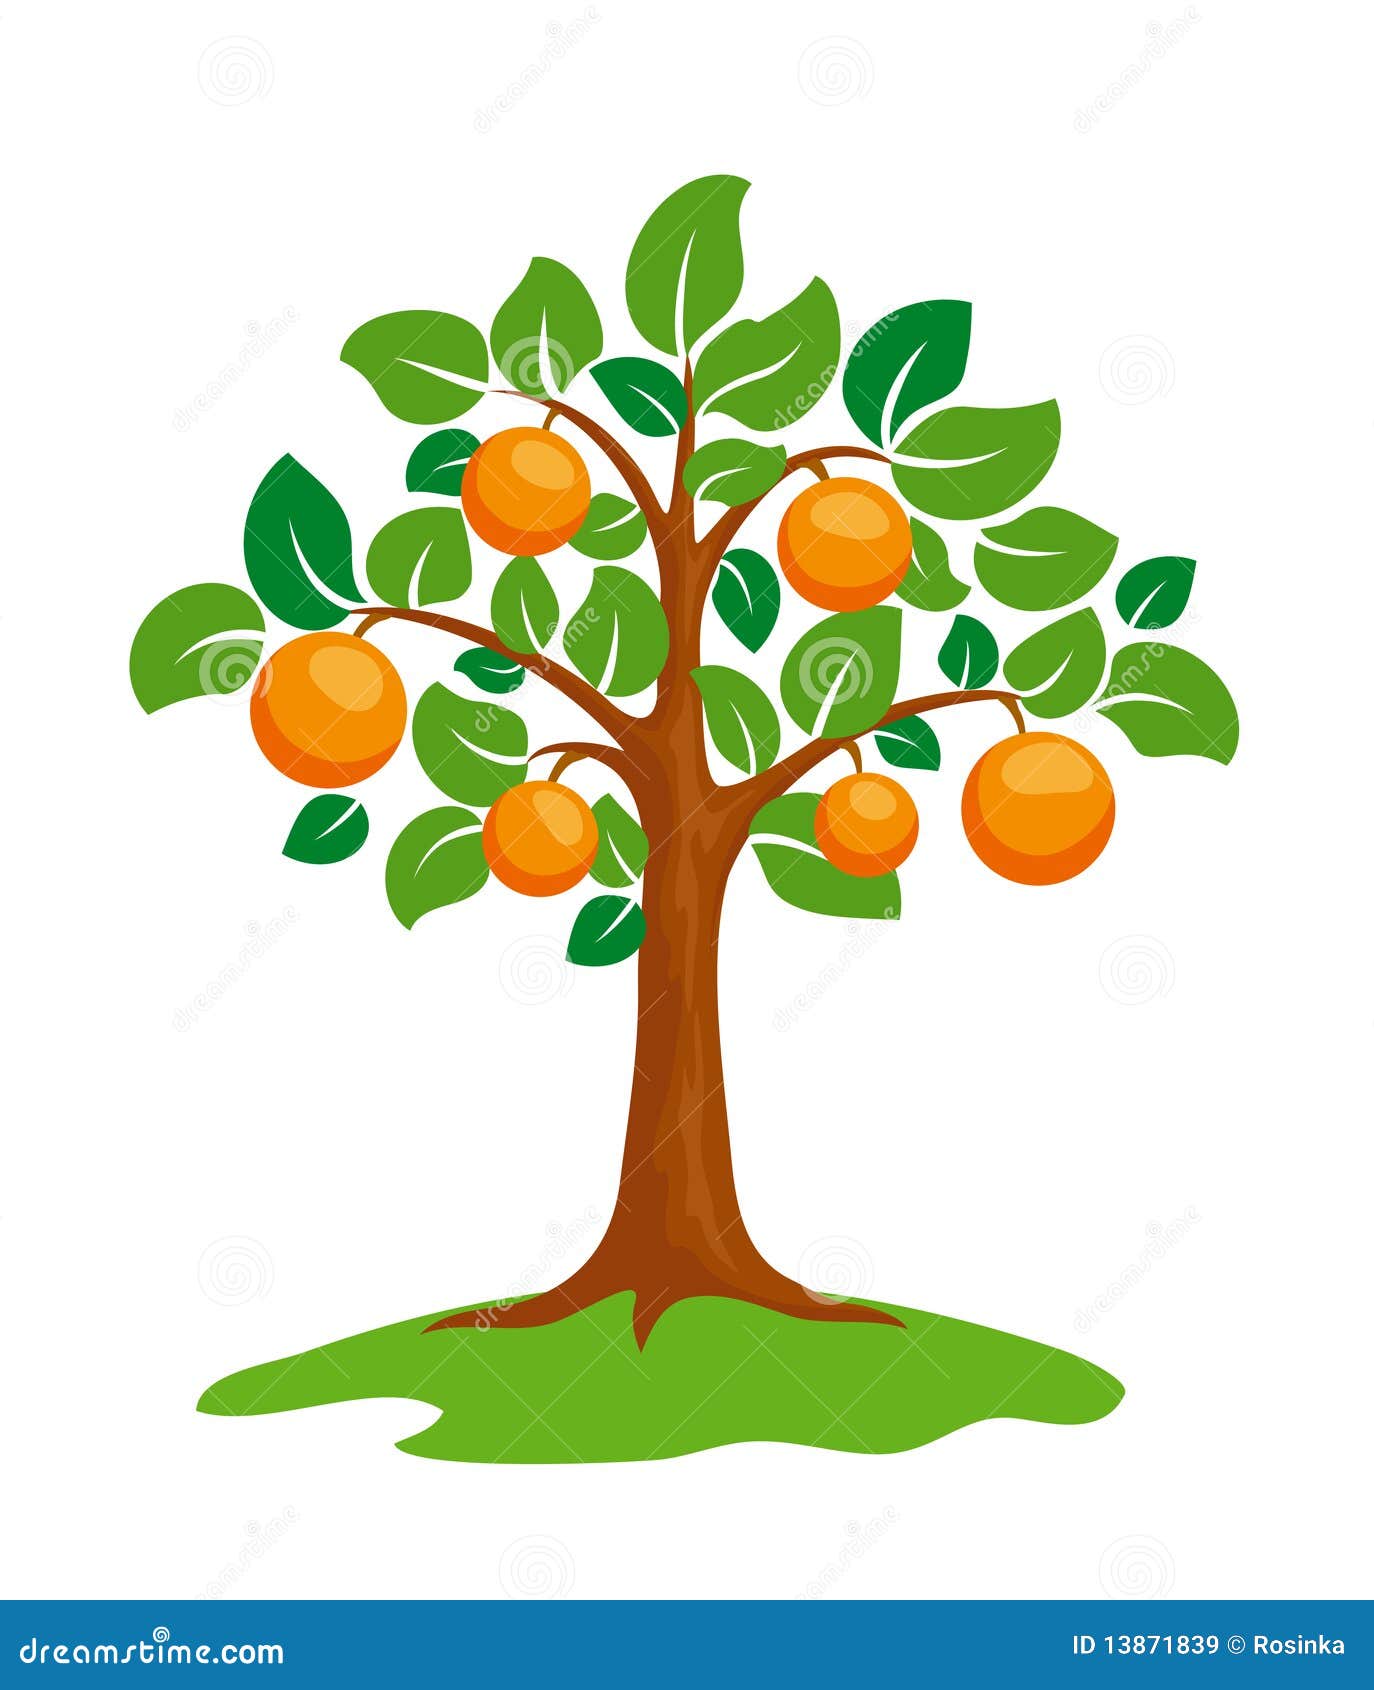 Free: Orange Tree Clipart - Draw A Fruit Tree - nohat.cc